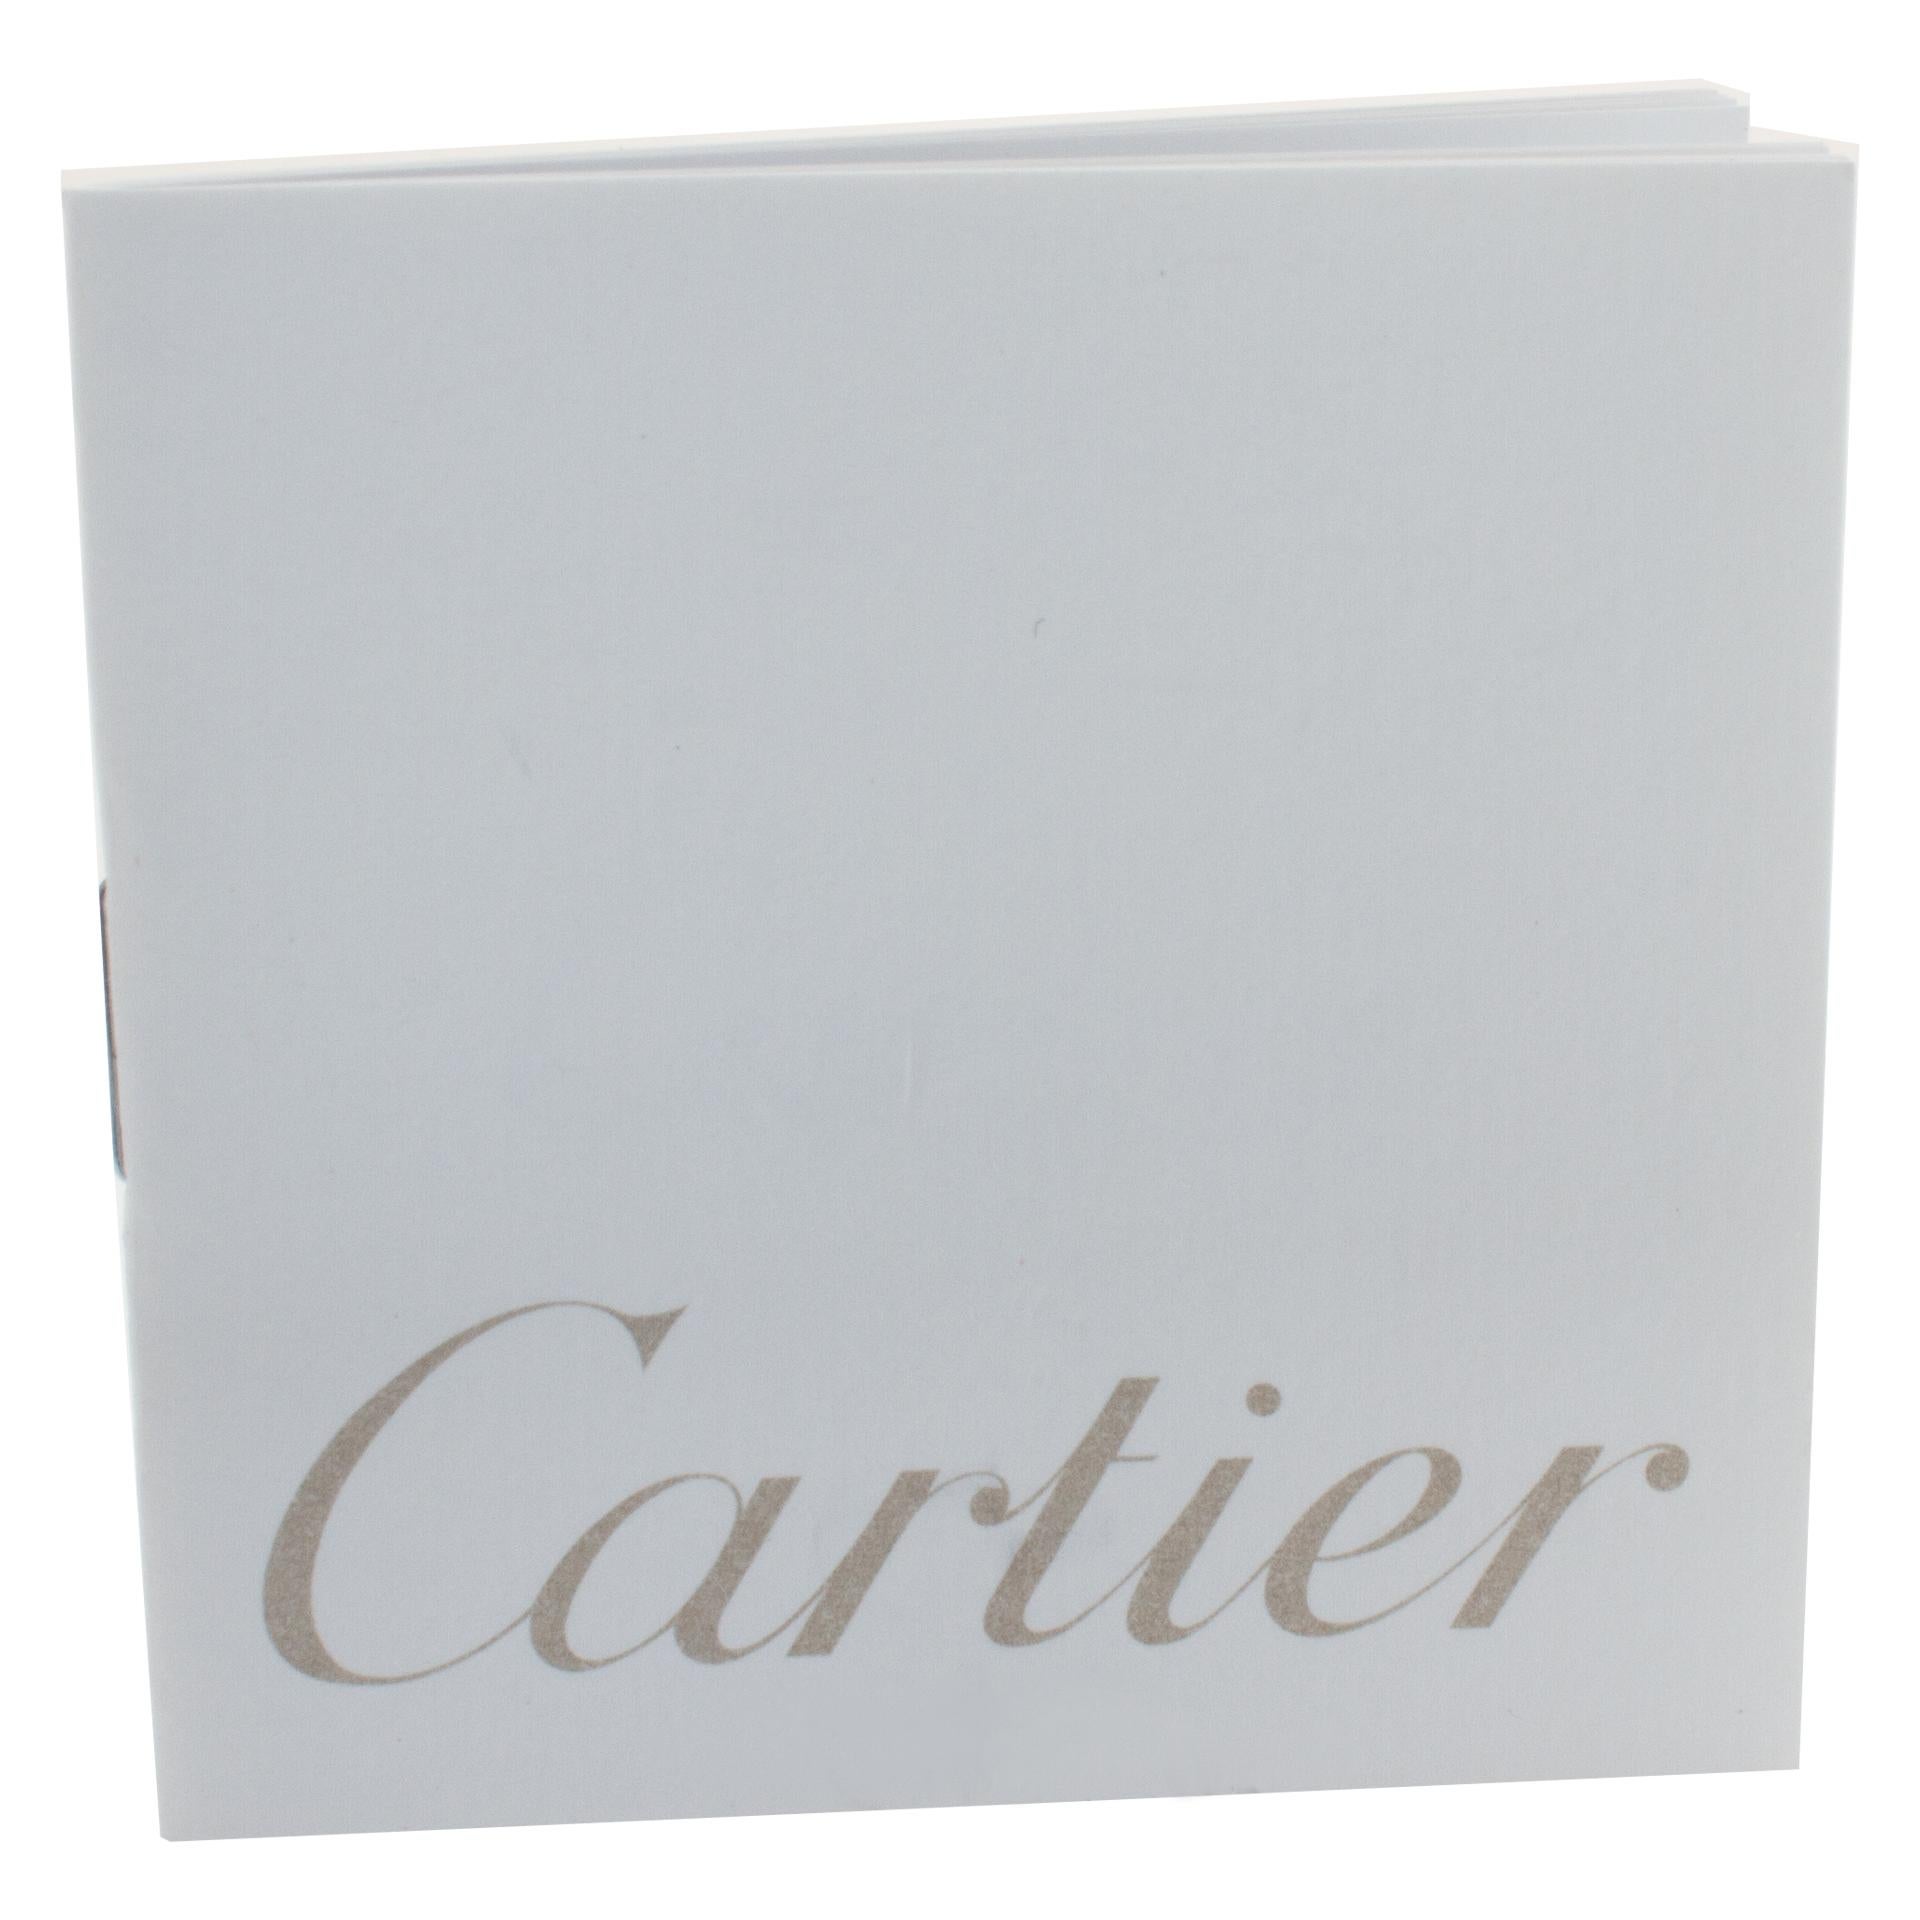 Cartier Tortue in 18 Karat White Gold with Diamonds 2